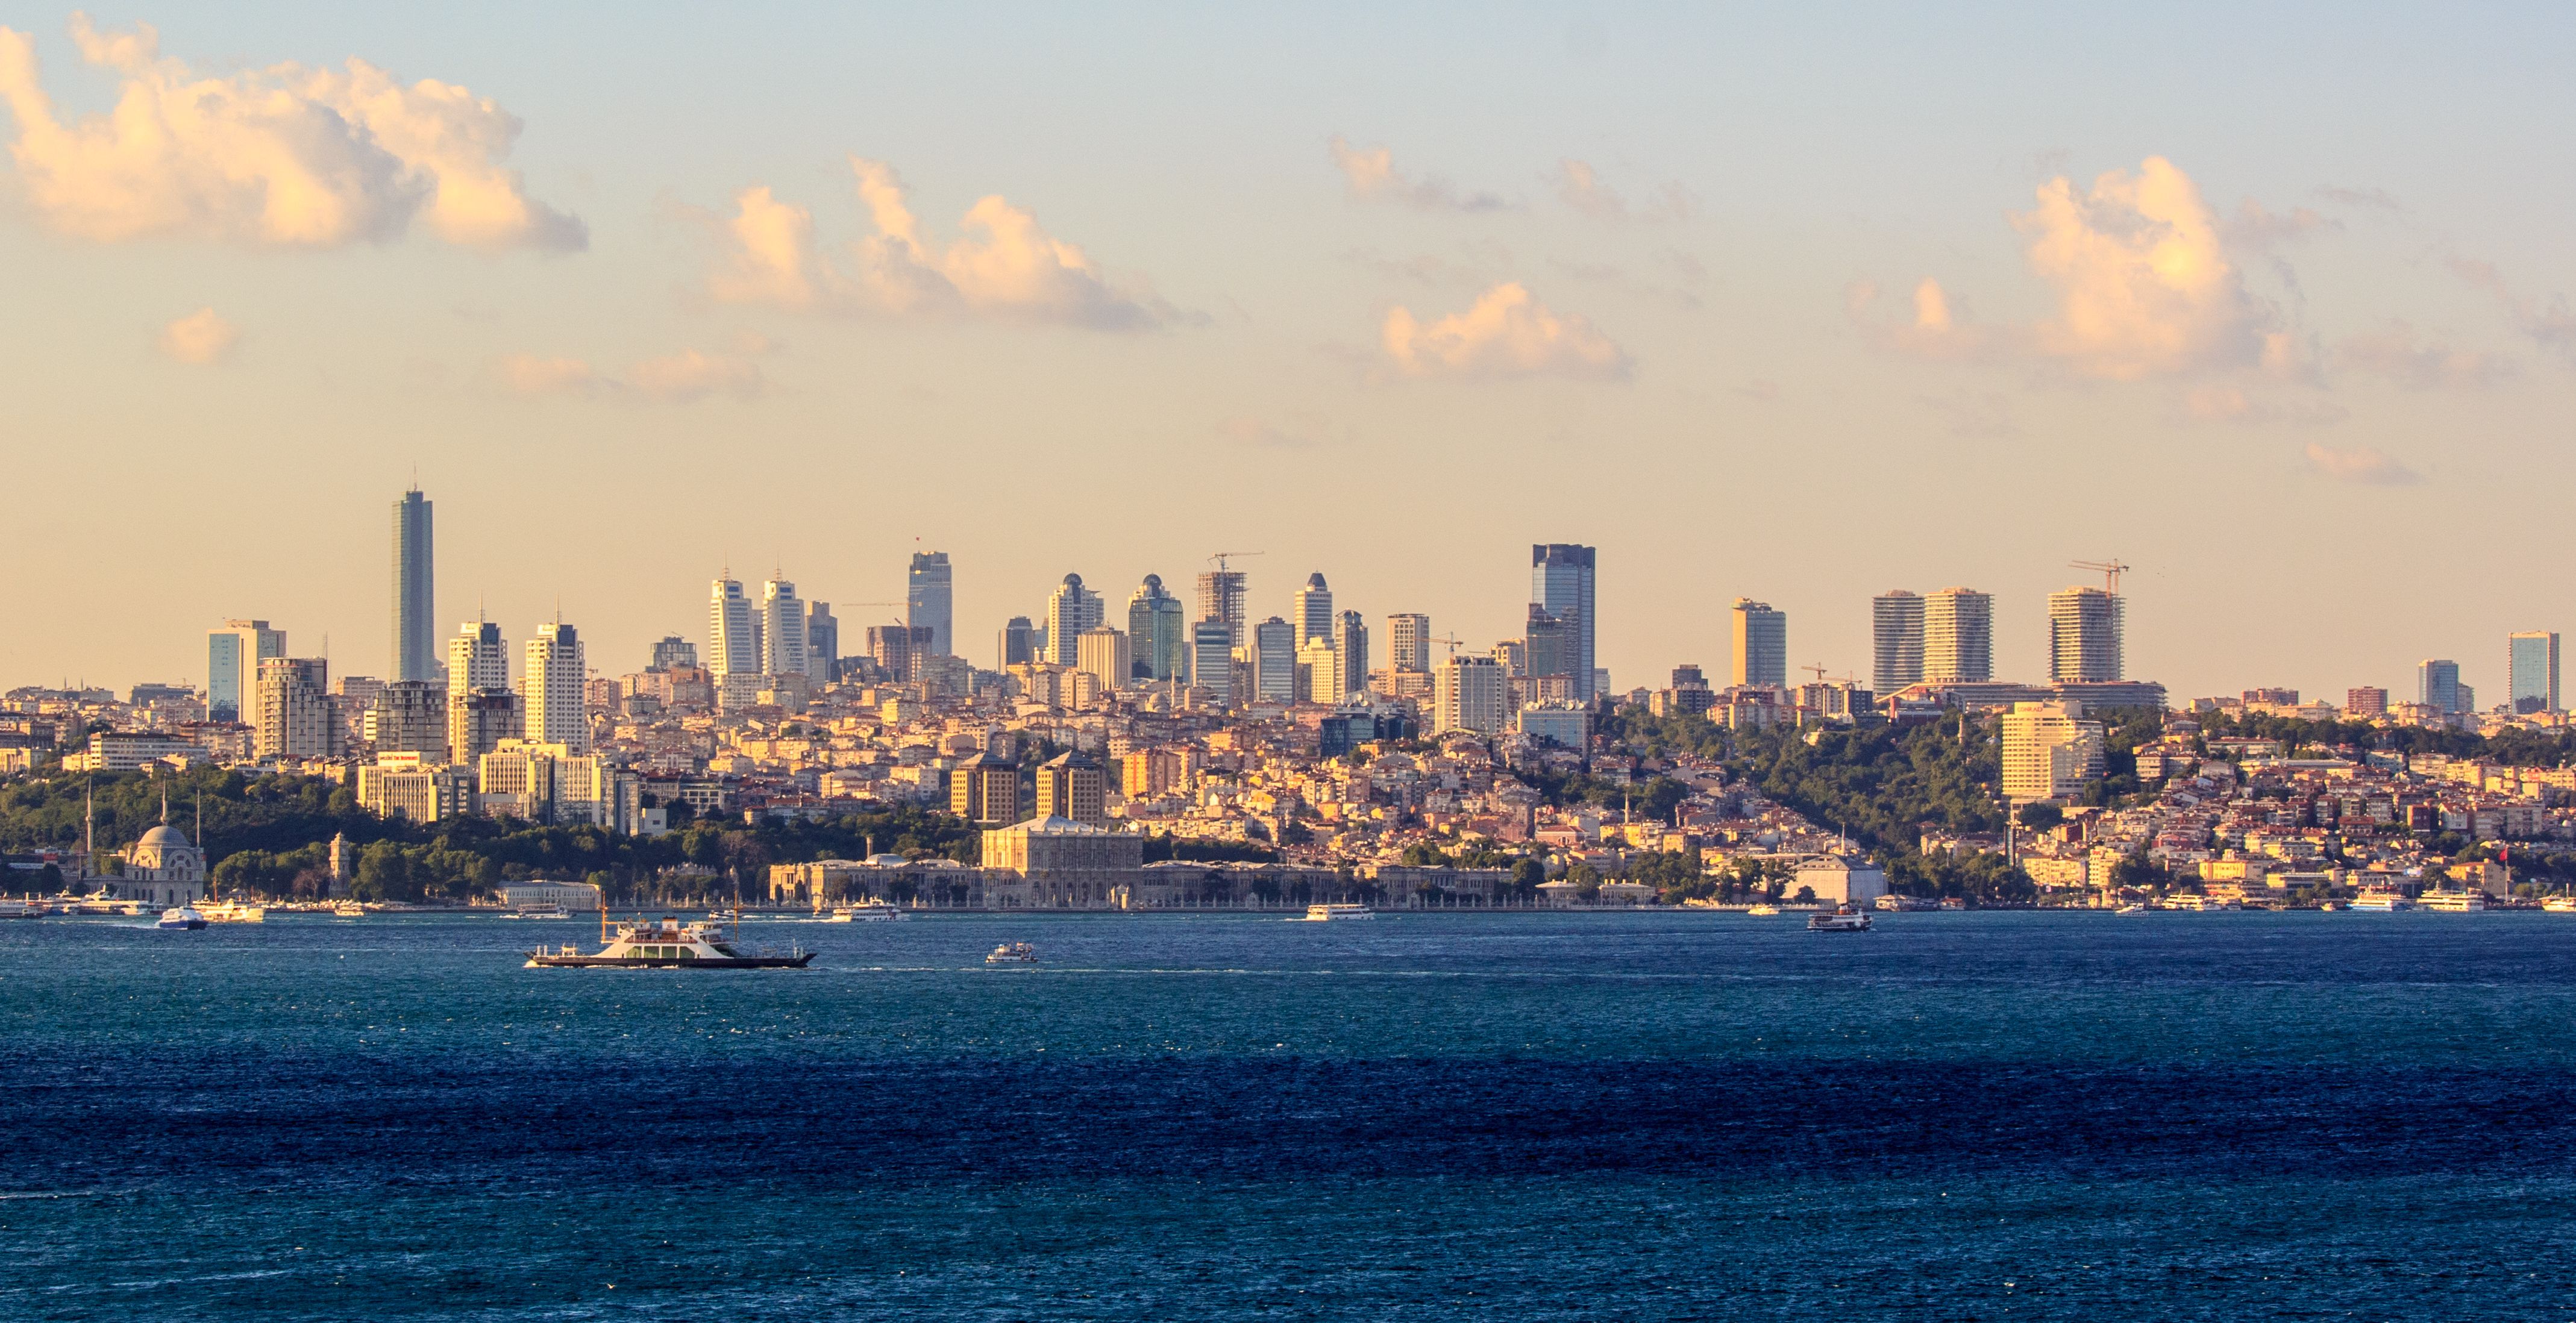 Istanbul - Wikipedia, the free encyclopedia